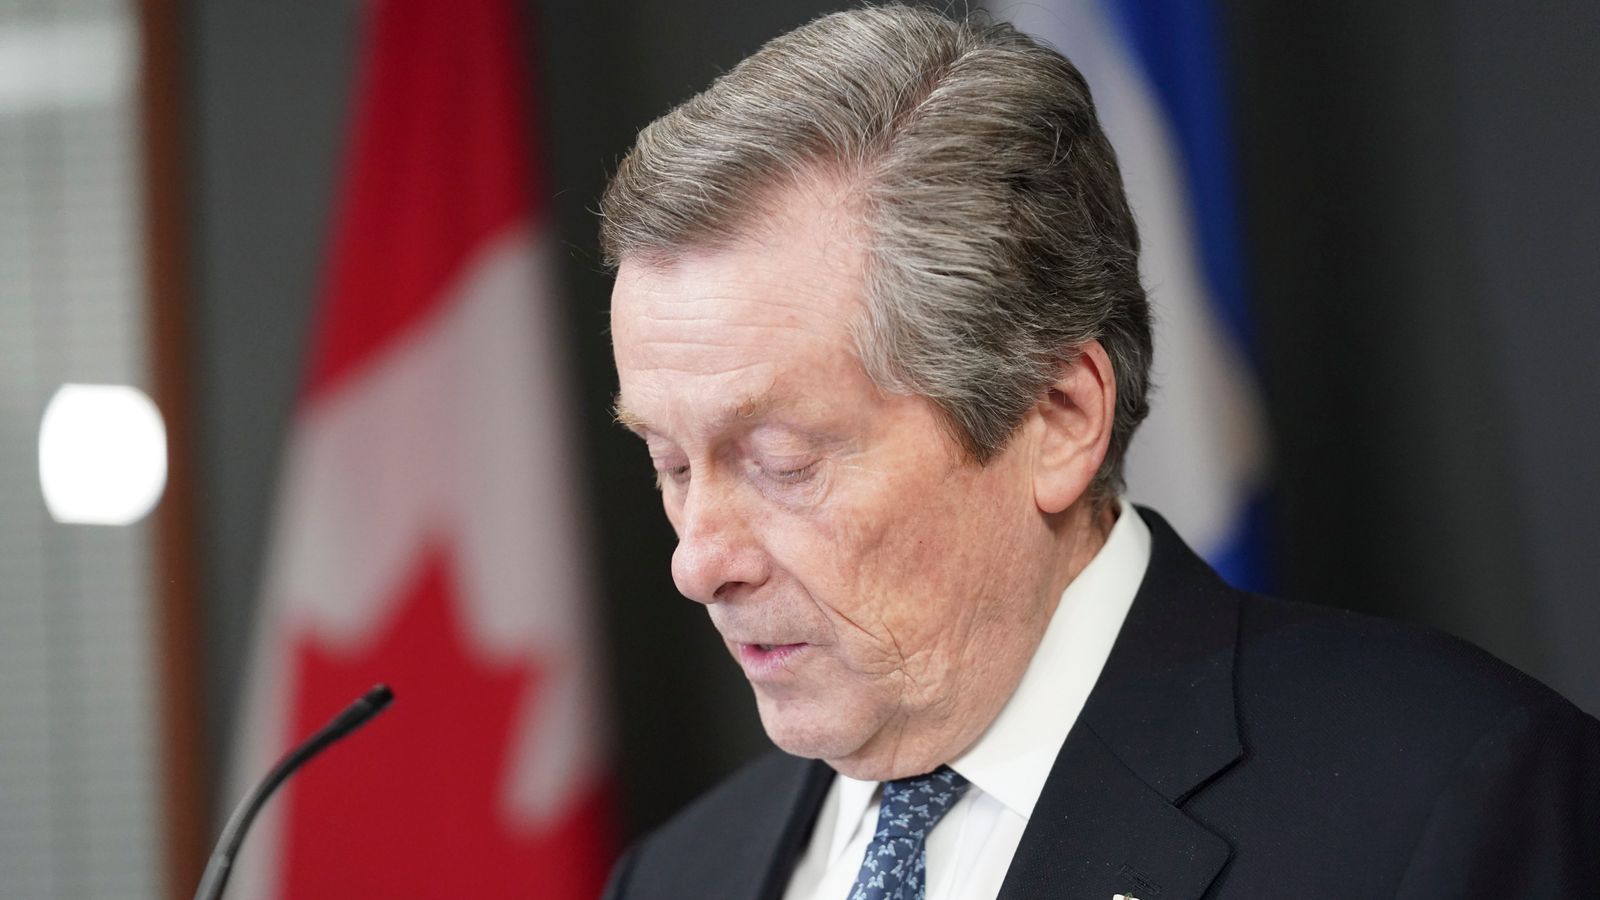 Toronto Mayor John Tory resigns over affair with staff | World News